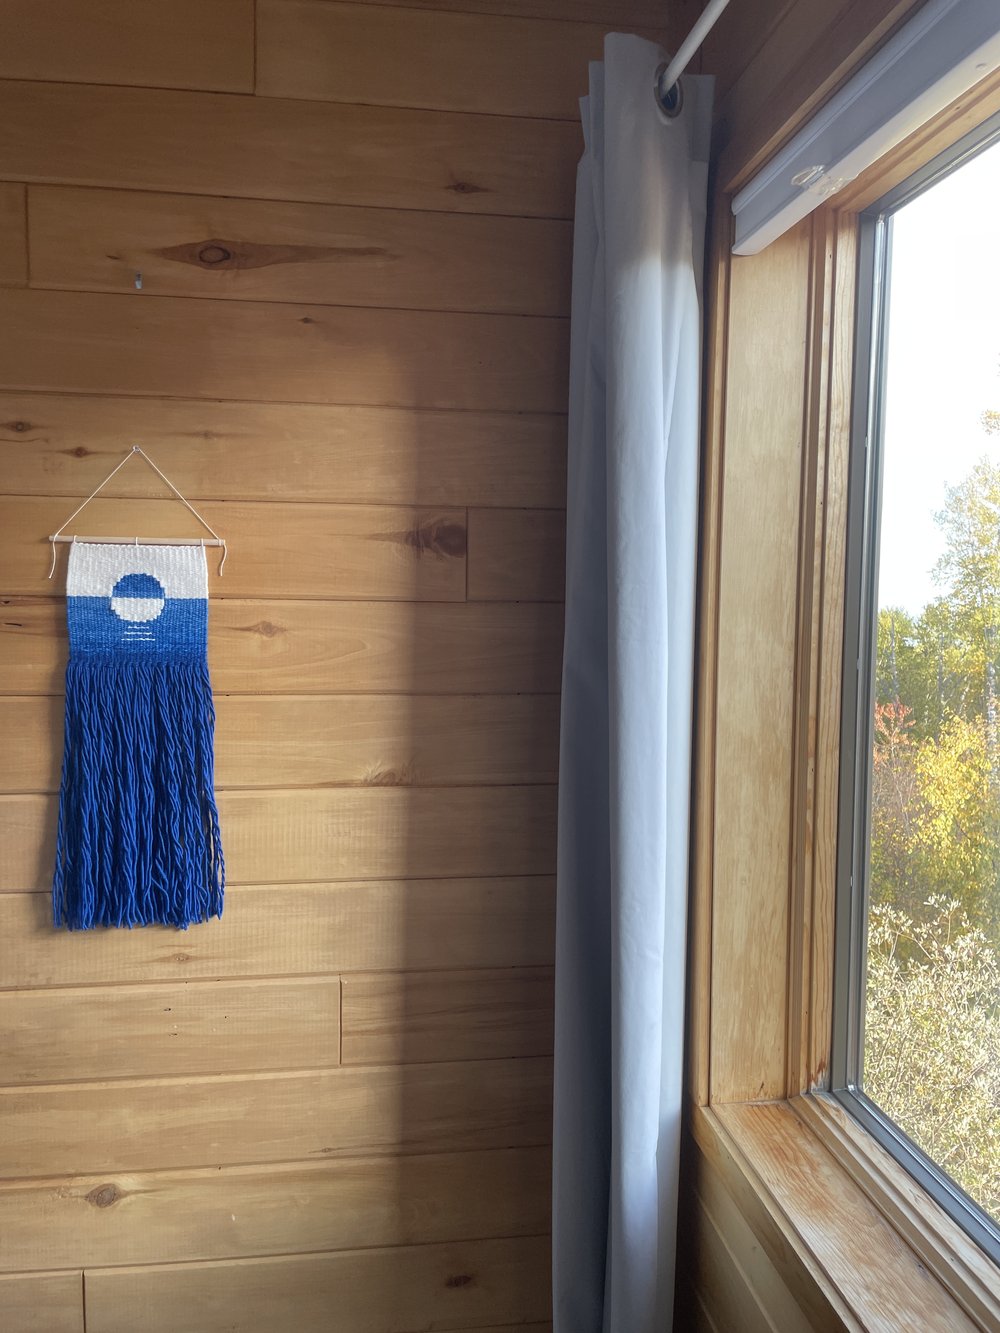 Sunrise Woven Wall Hanging – Mini Weaving Loom Project – Clover Needlecraft